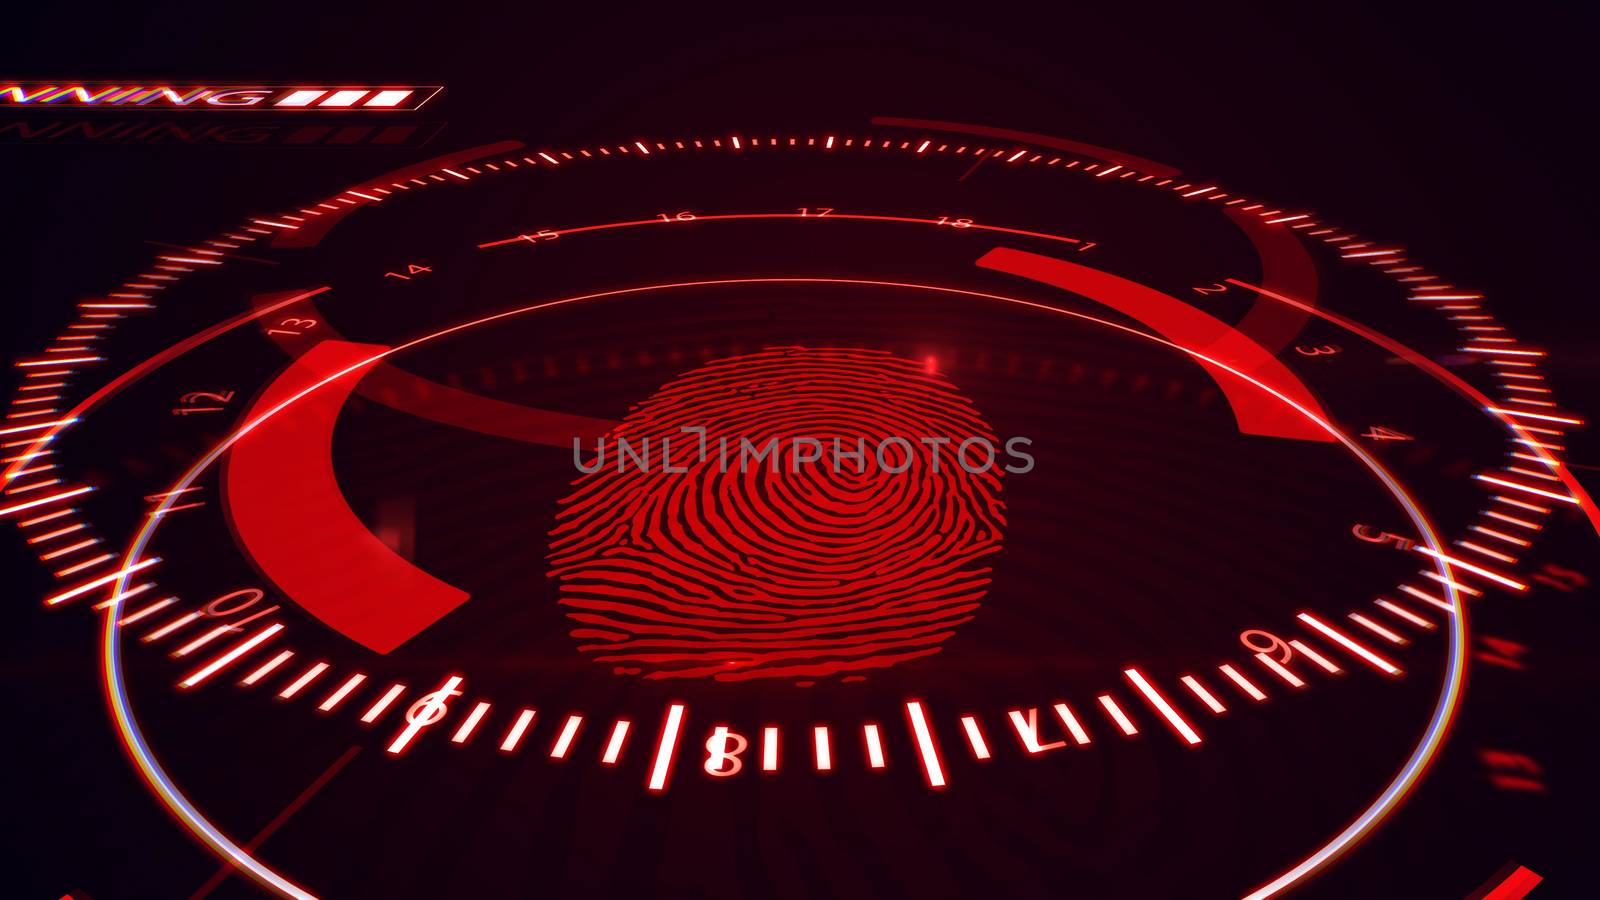 Fingerprint scanning technology. Red color. by klss